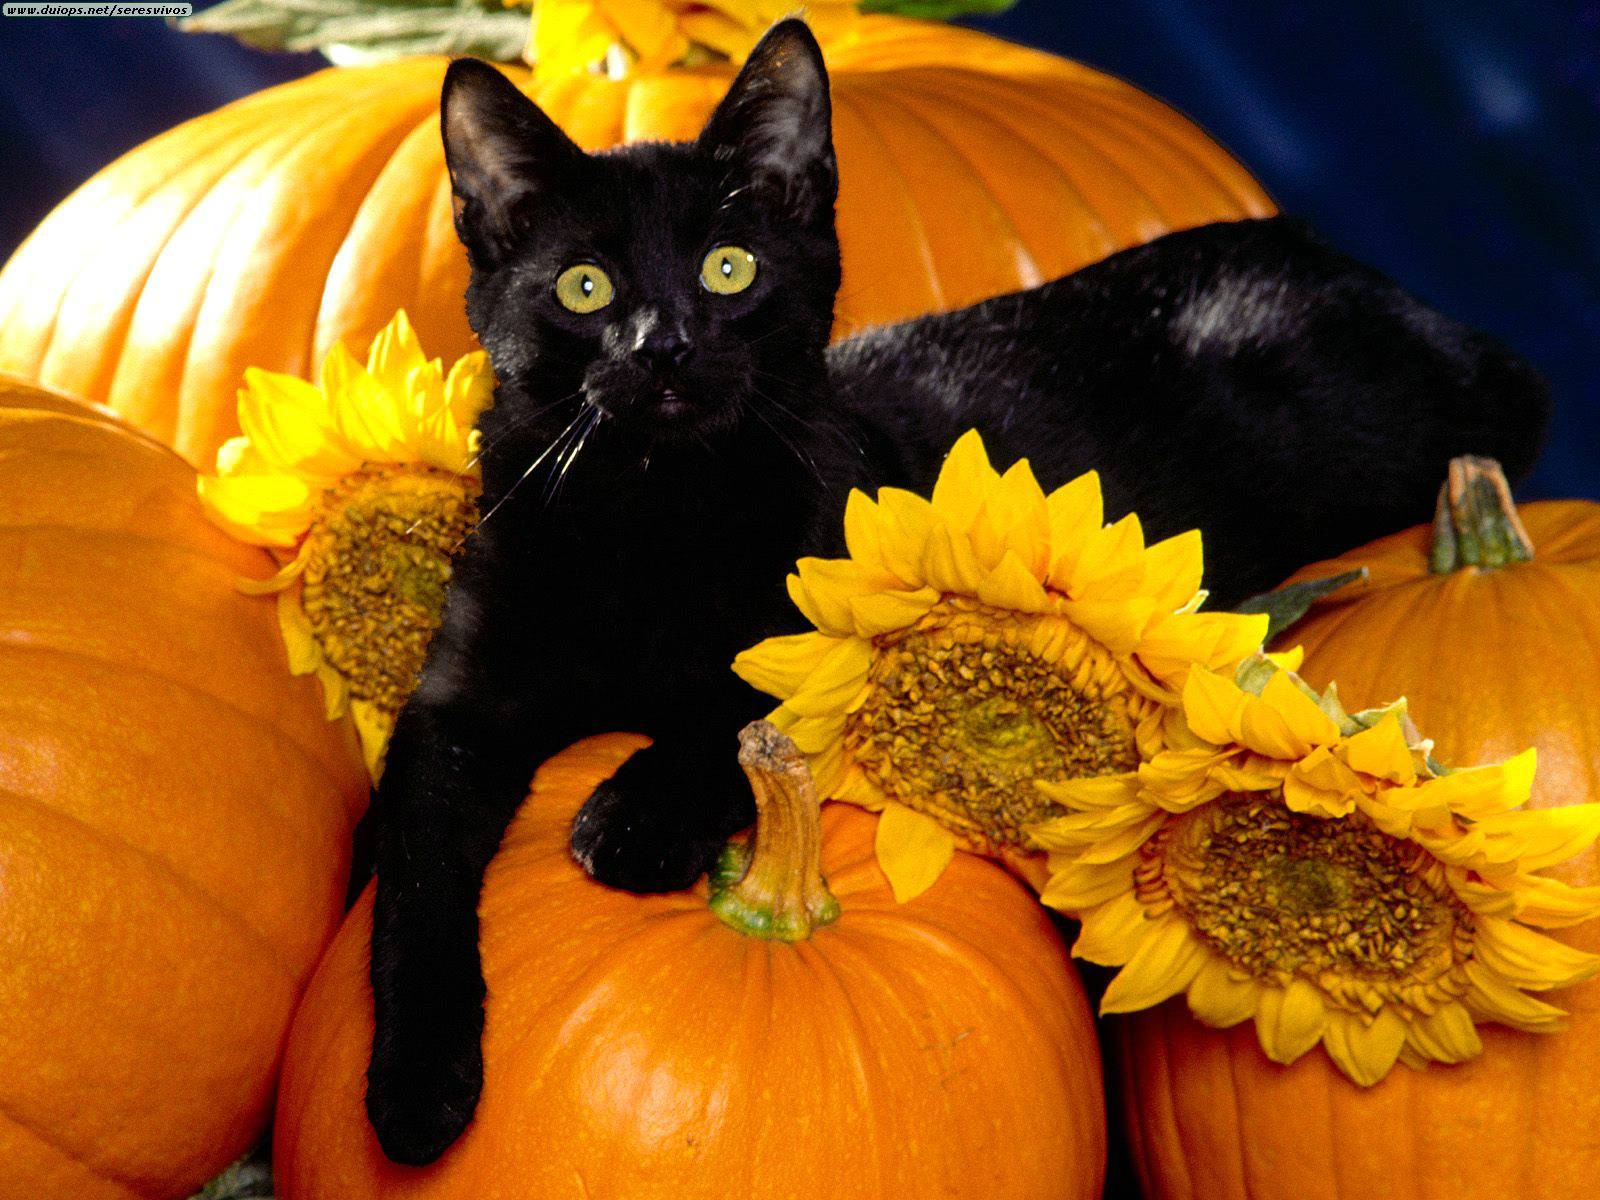 Black Cat Sitting on Pumpkins